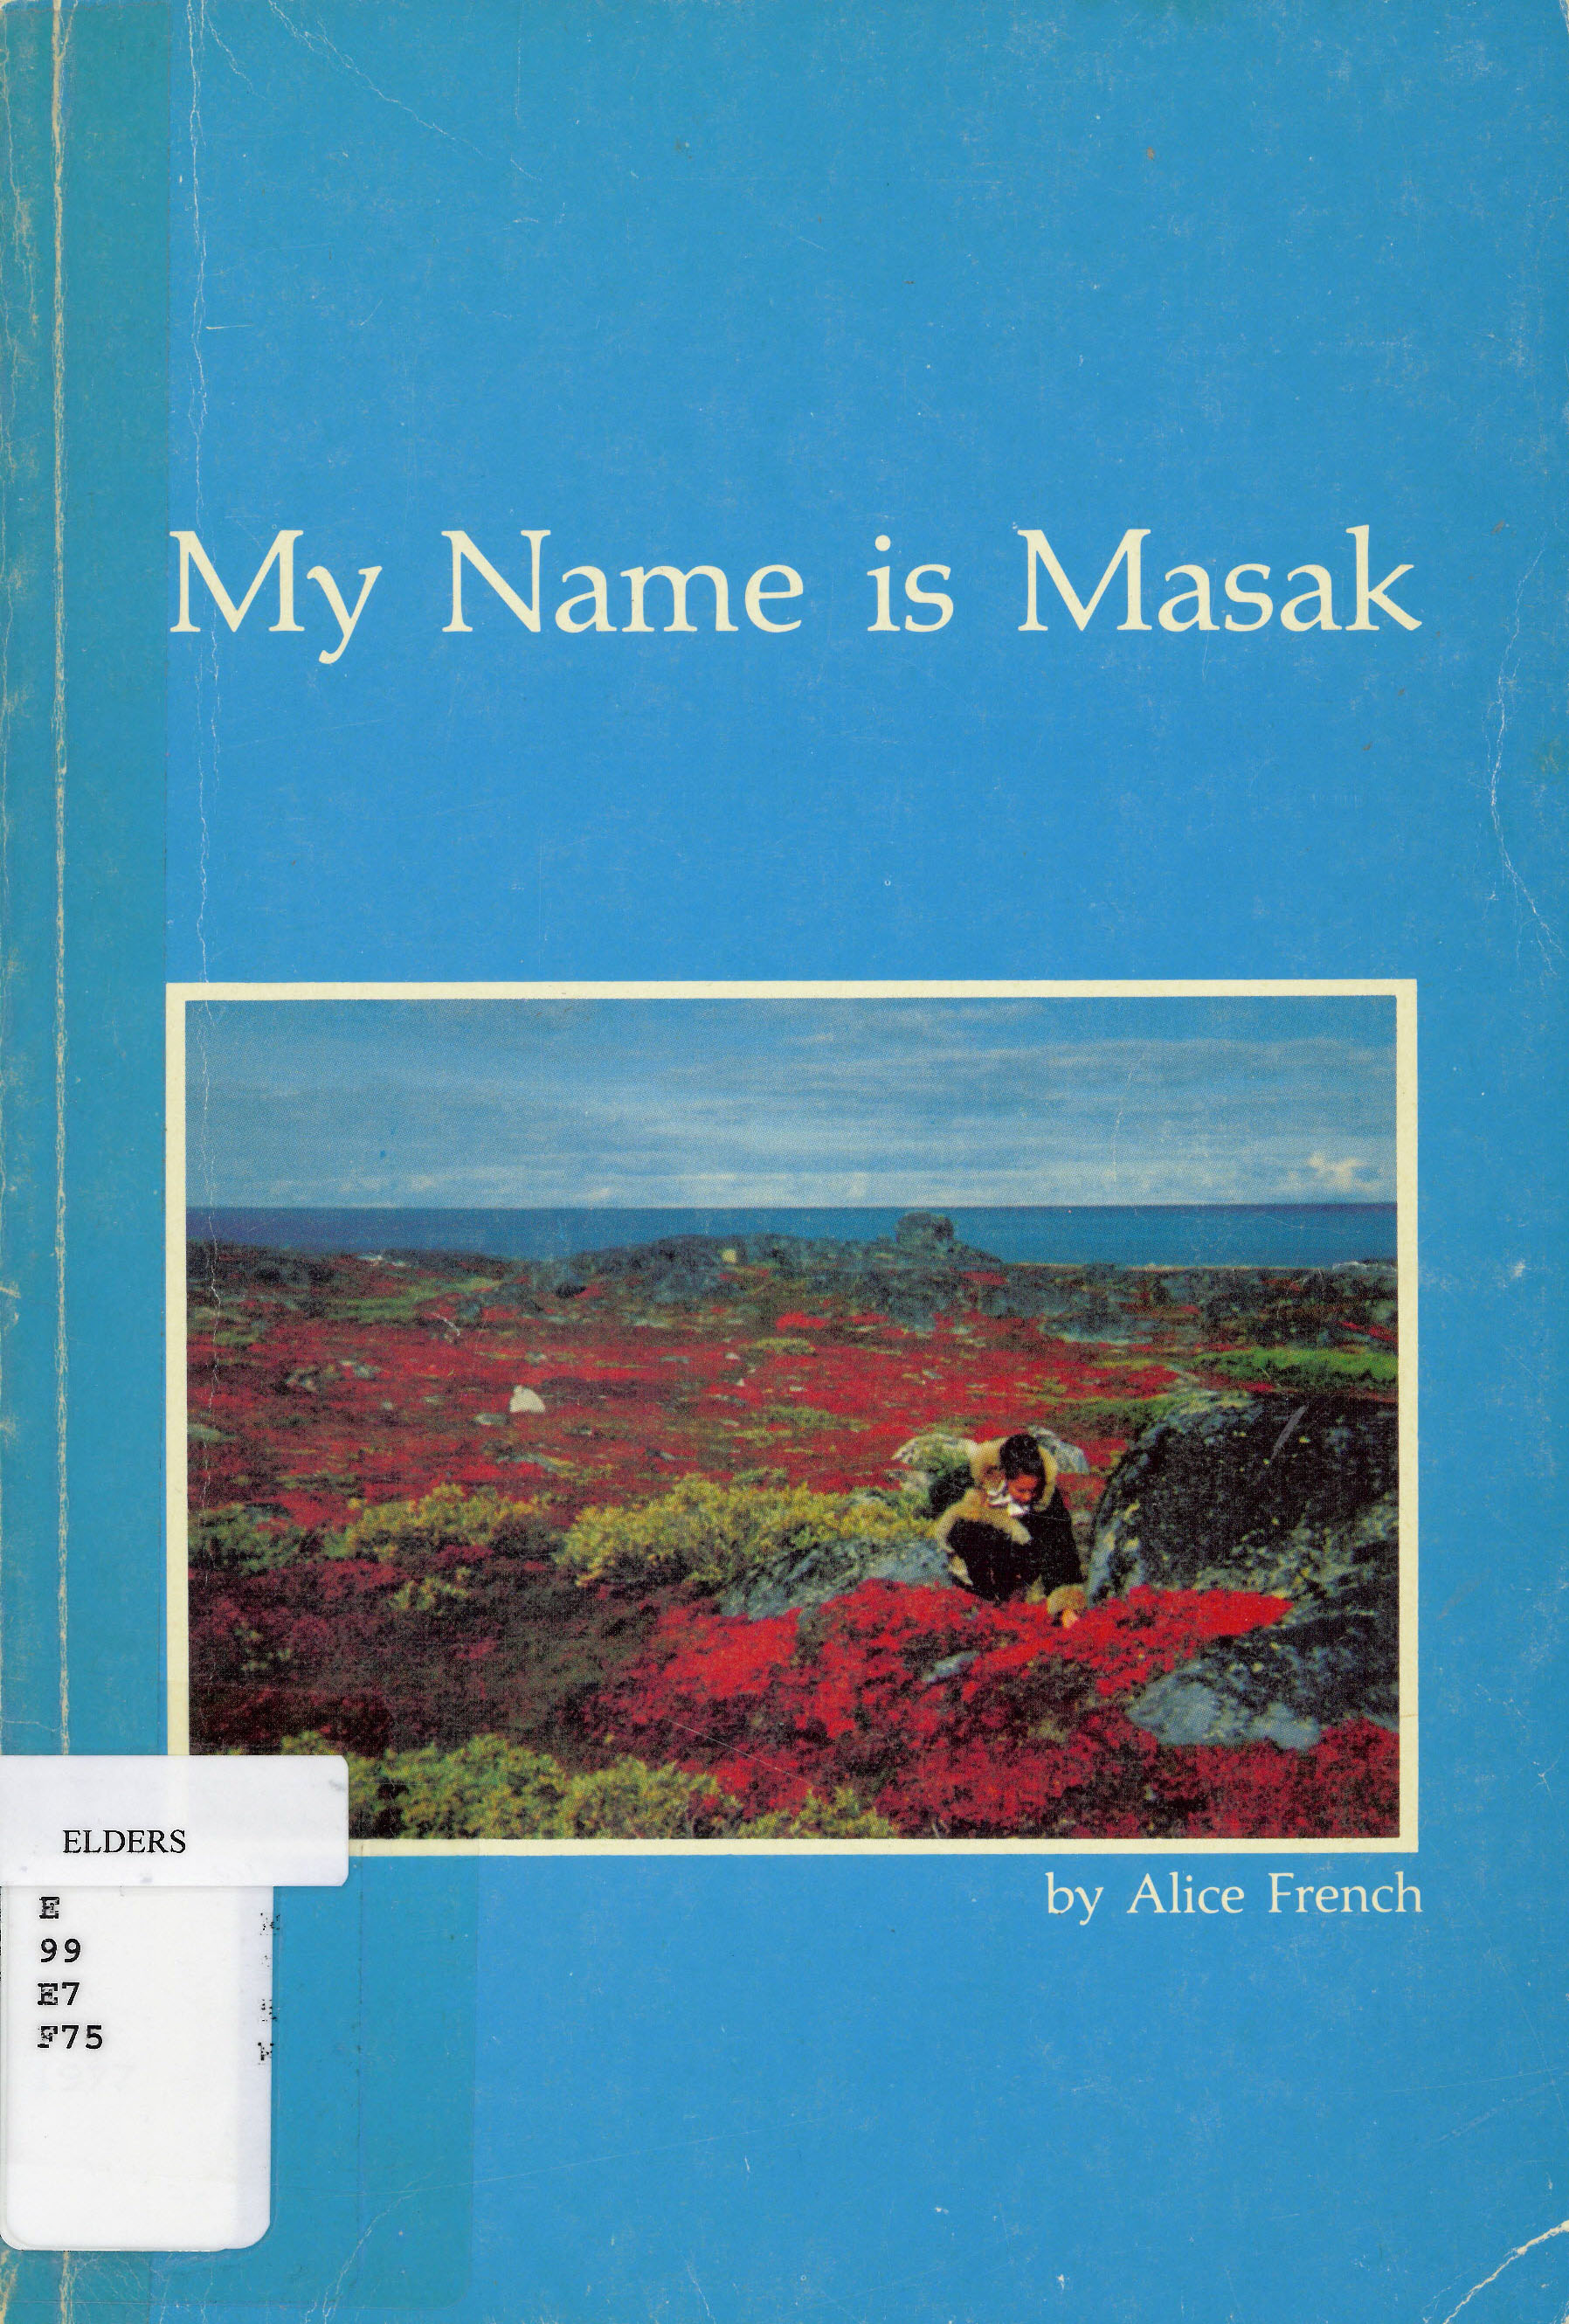 My name is Masak